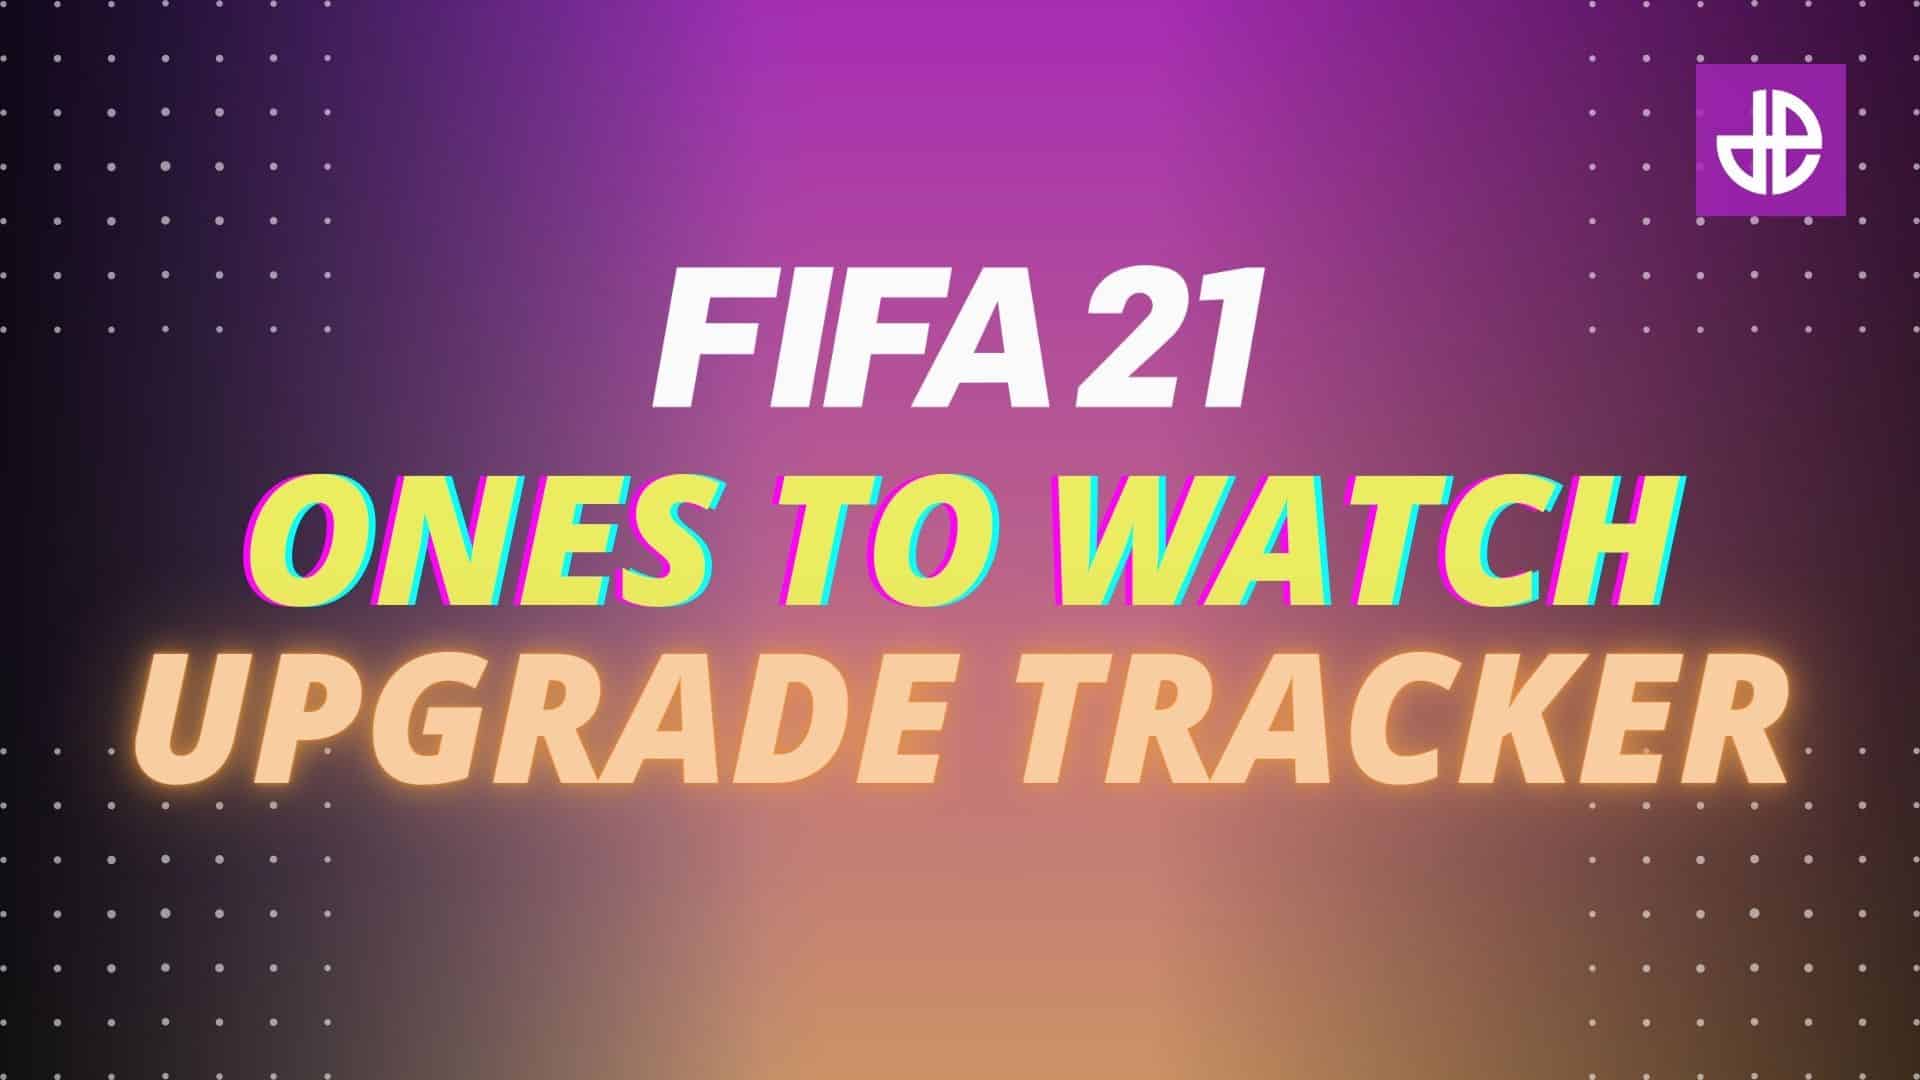 FIFA 21 OTW tracker